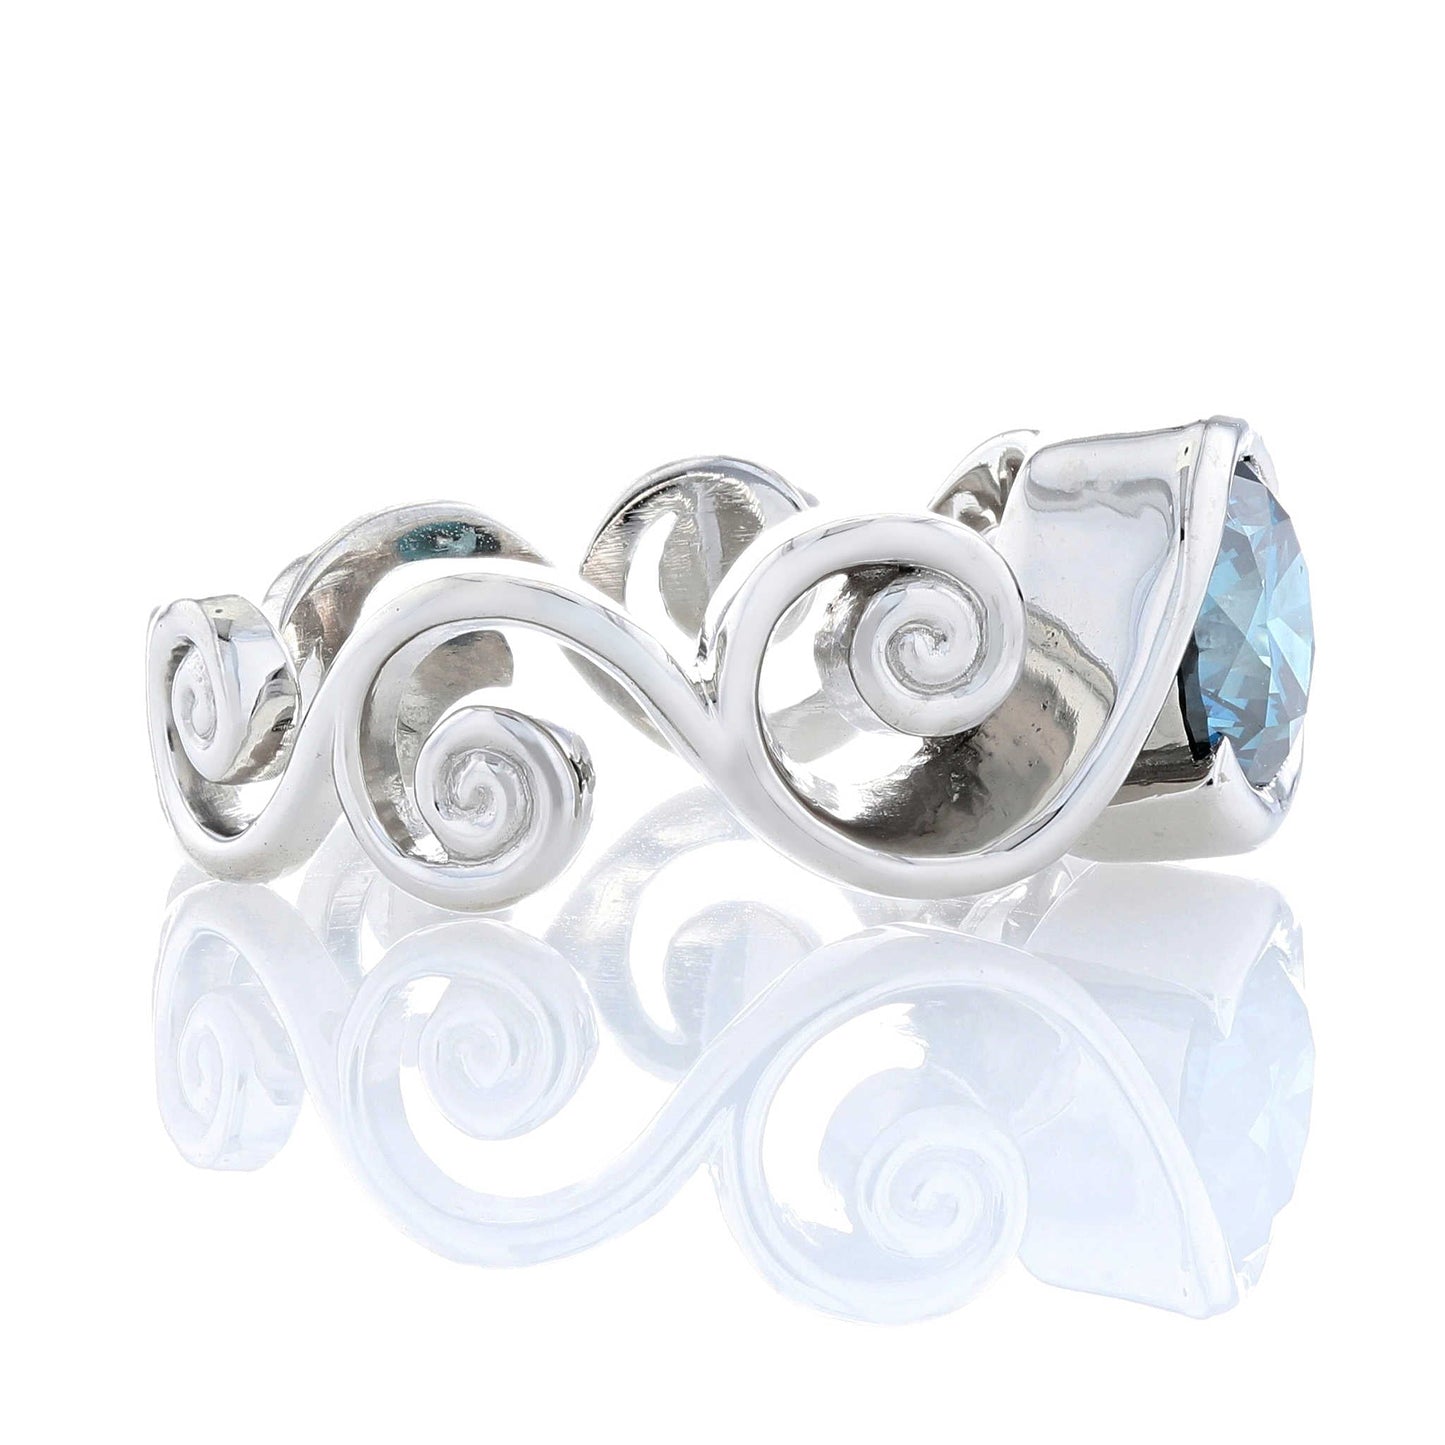 Bezel Set Swirl Blue Diamond Engagement Ring